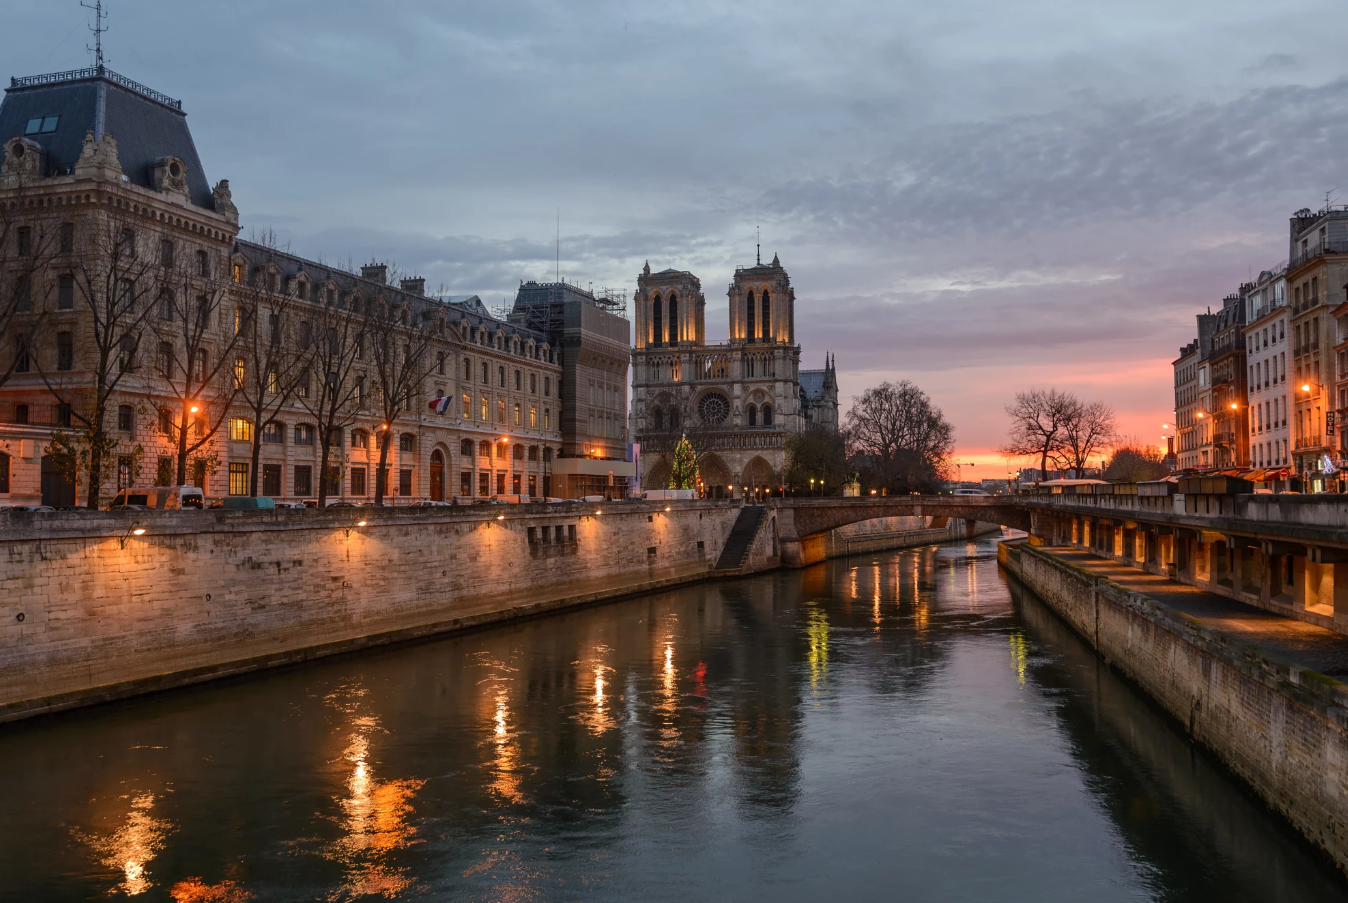 Речка сена. Берега Сены в Париже ЮНЕСКО. Река сена во Франции. Набережная Орлеан в Париже. Река сена в Париже.